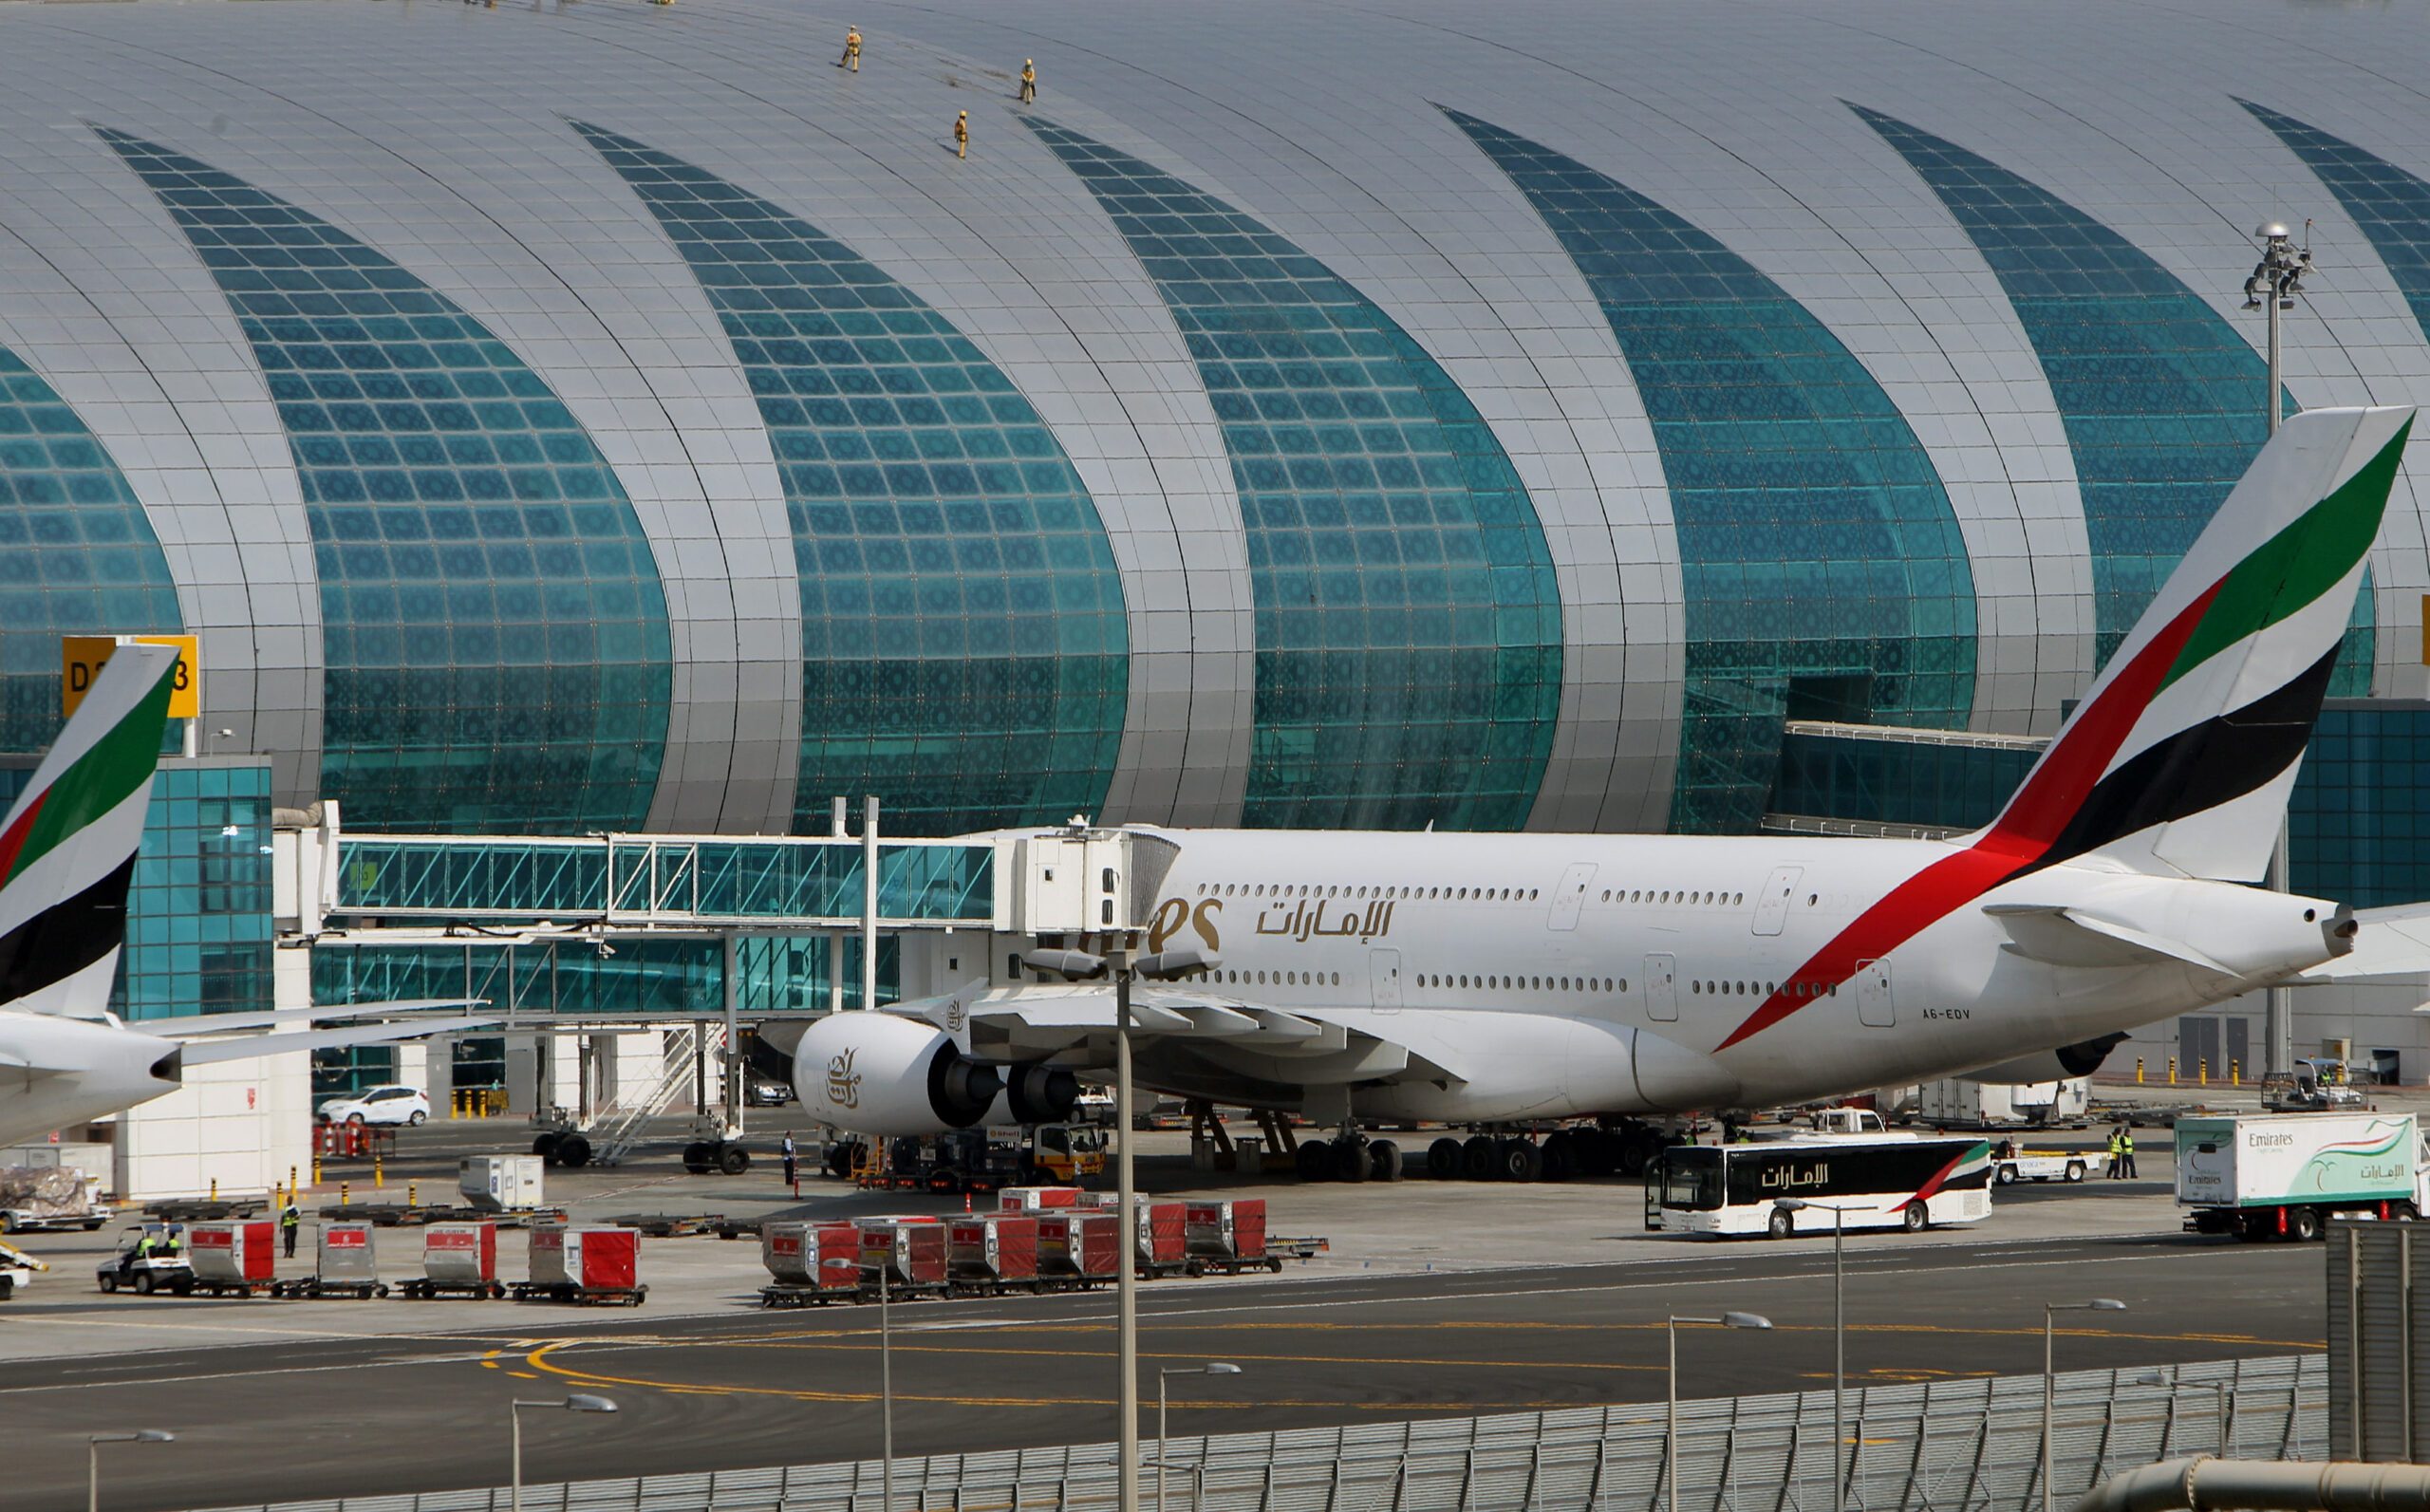 UAE to suspend all passenger flights – state media